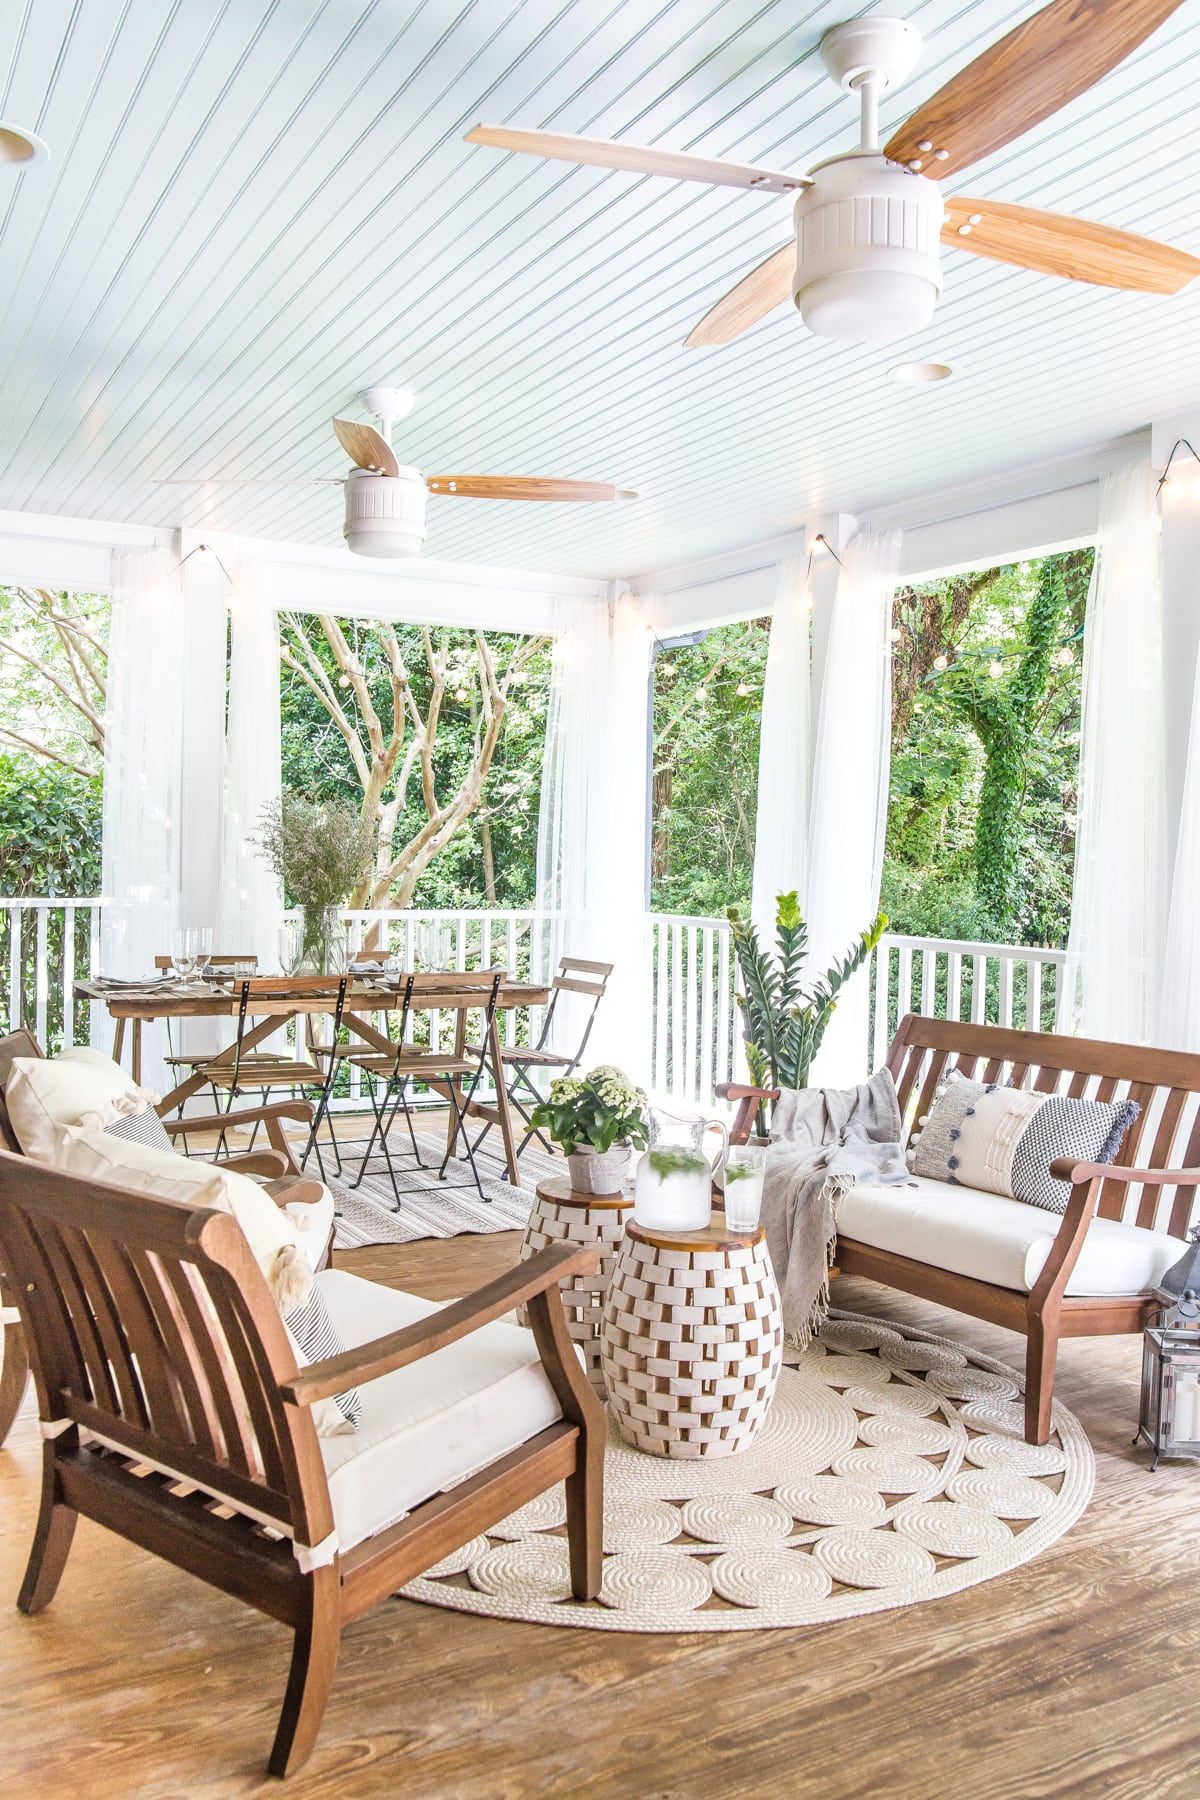 Creative Ideas for Your Outdoor Porch